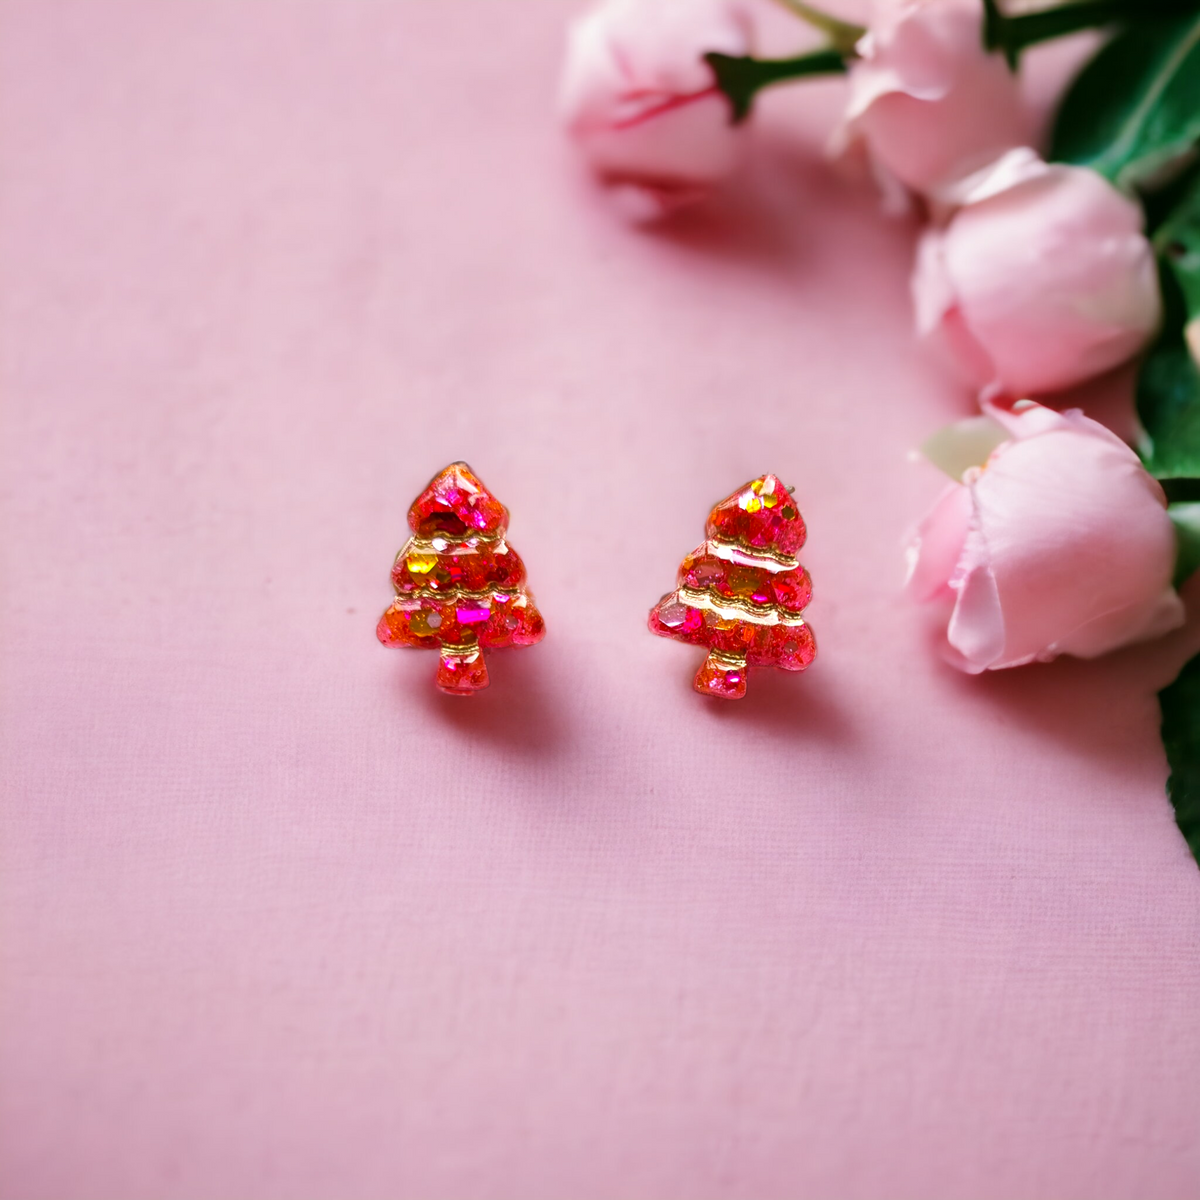 3D pink glitter and gold mini tree stud earrings